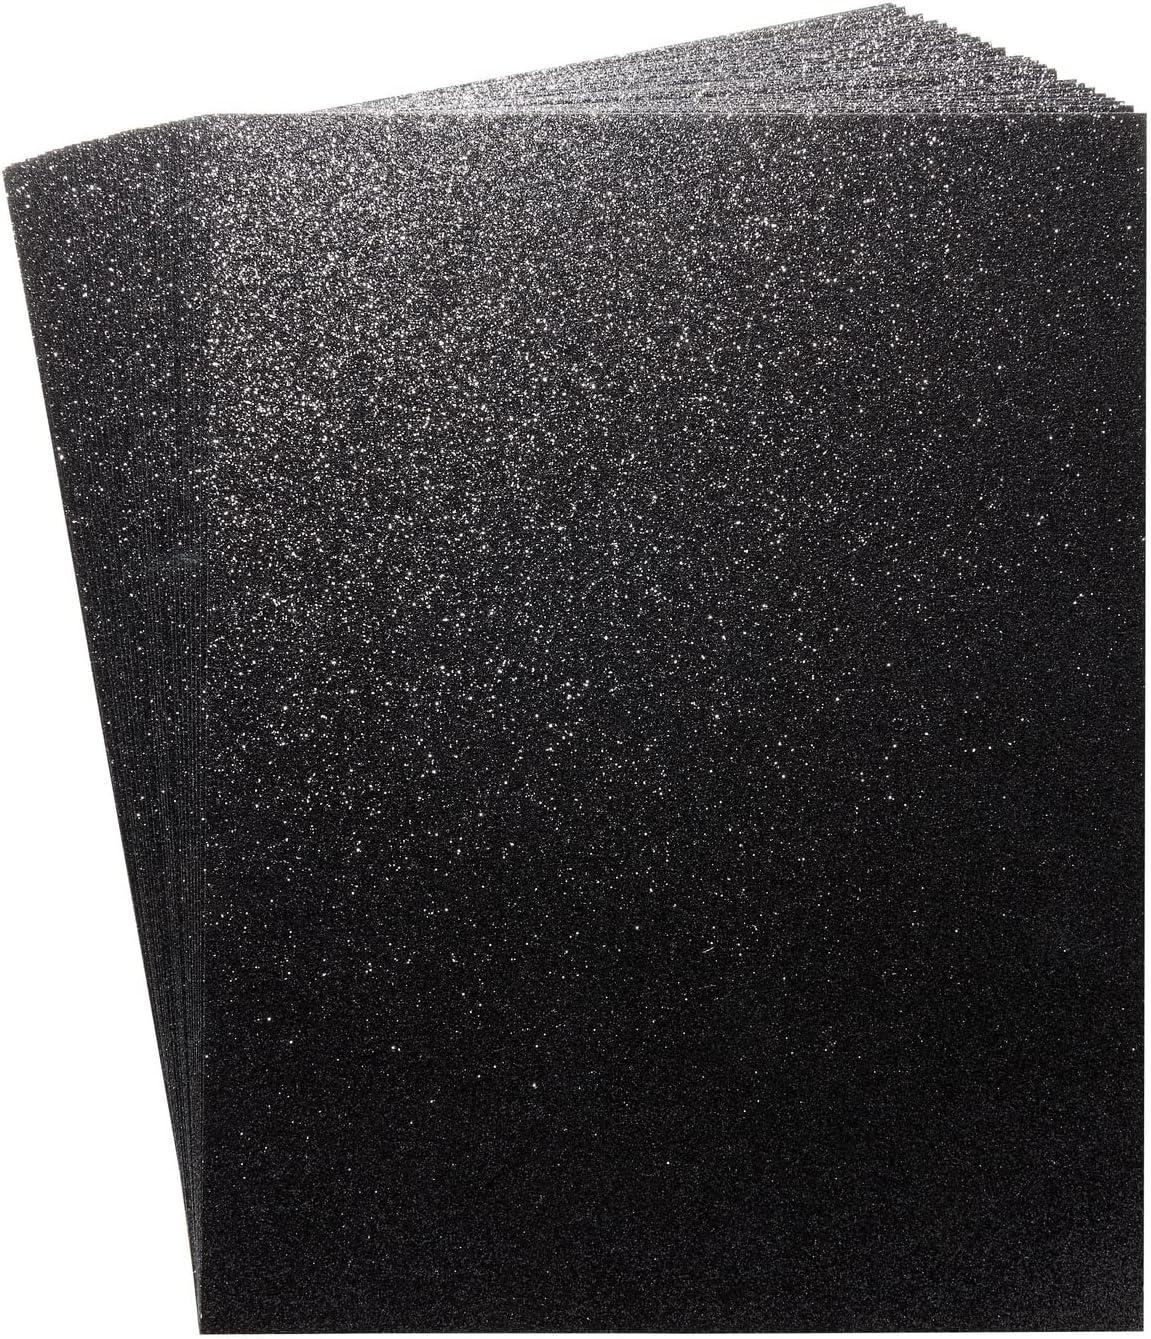 Honeyplum Black Glitter Cardstock - 10 Sheets Premium Glitter Paper - Sized  12 x 12 - Perfect for Scrapbooking, Crafts, Decorations